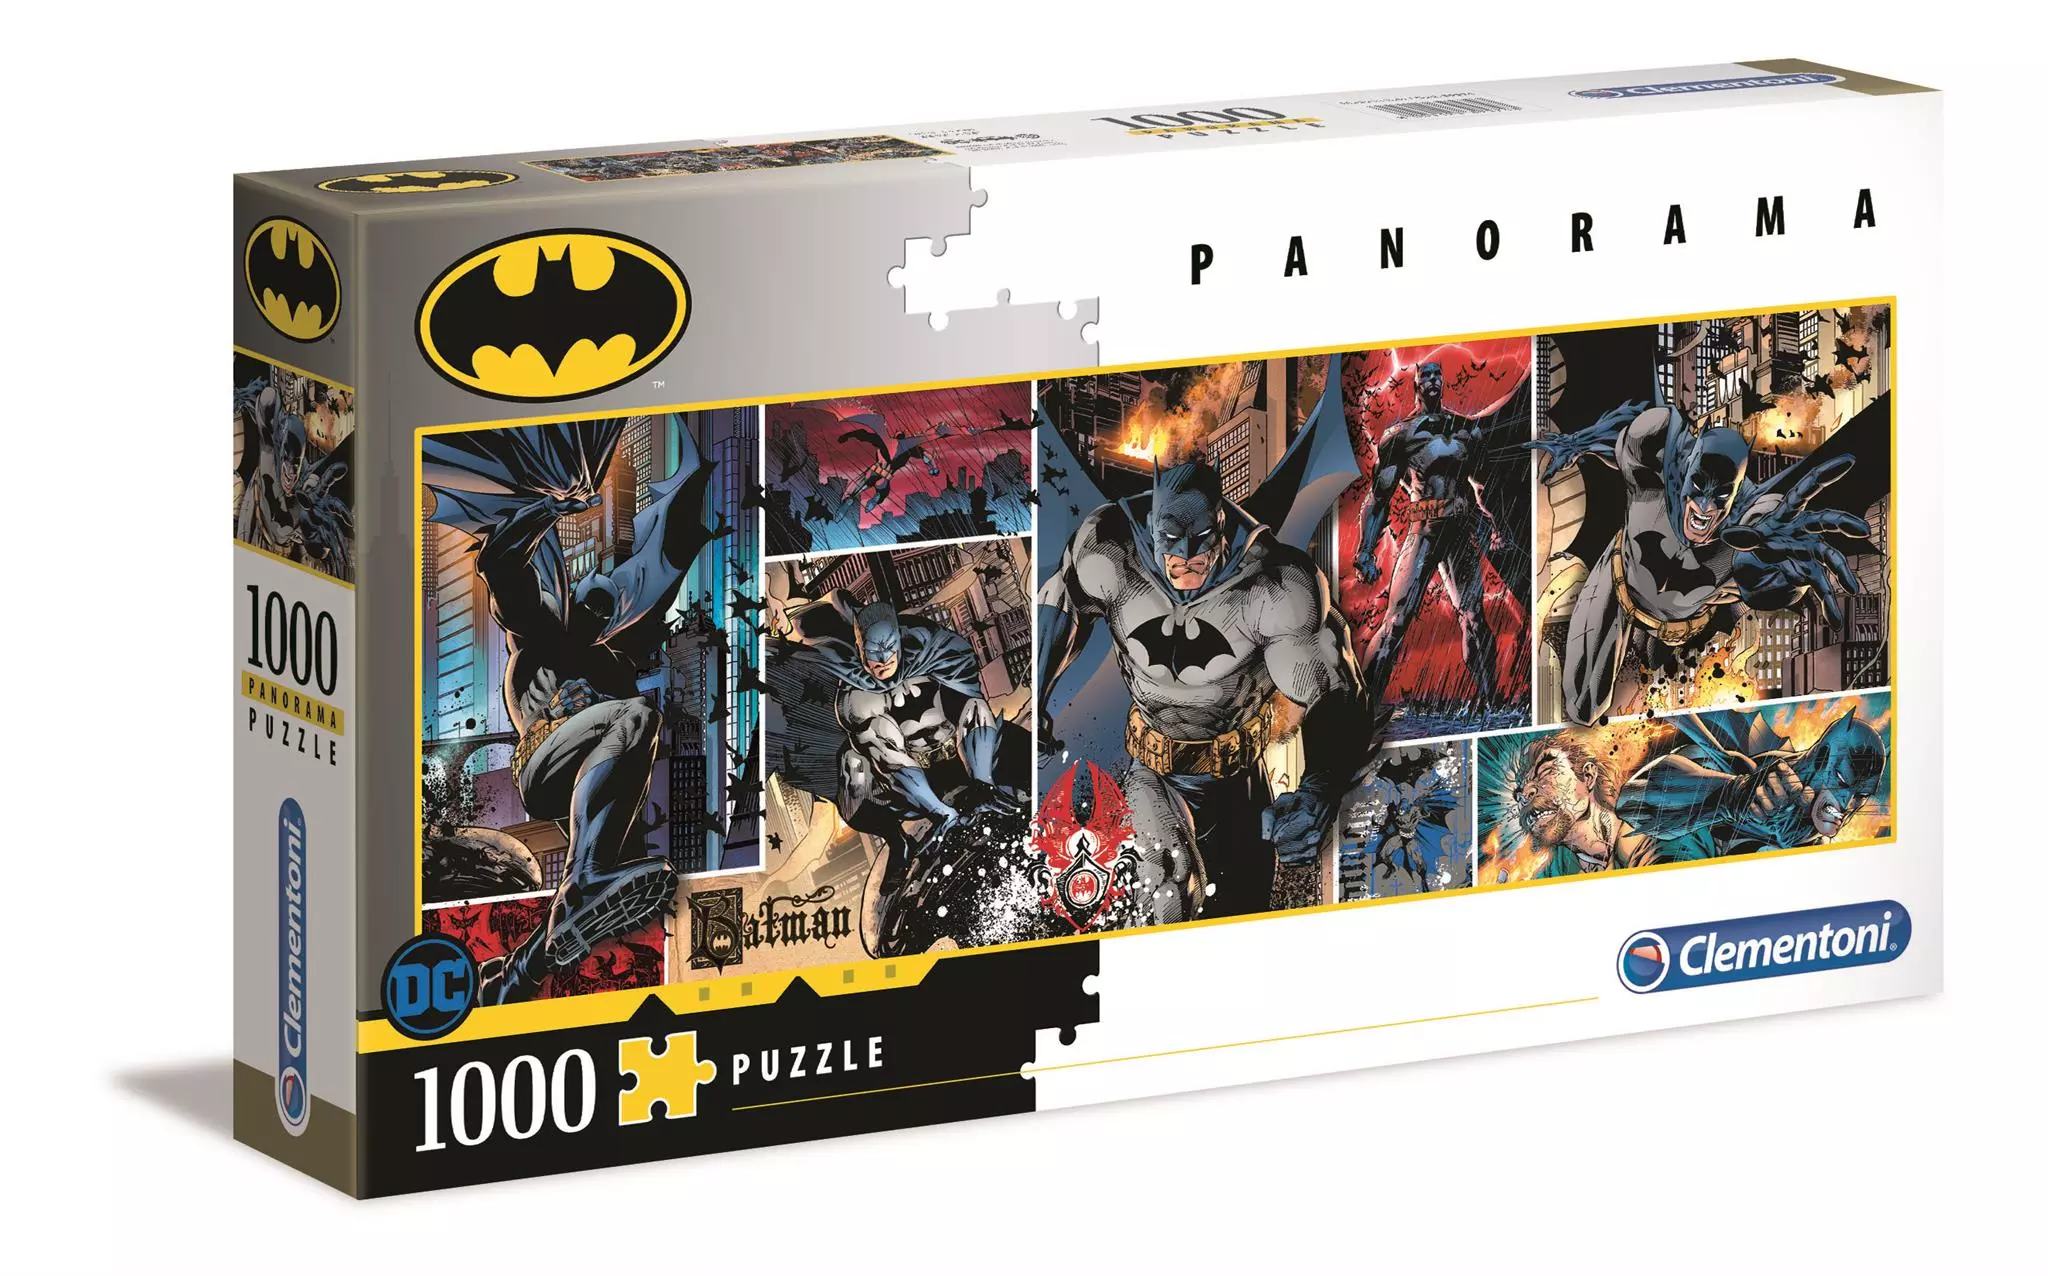 Clementoni Panorama Puzzle 1000 Pcs Batman